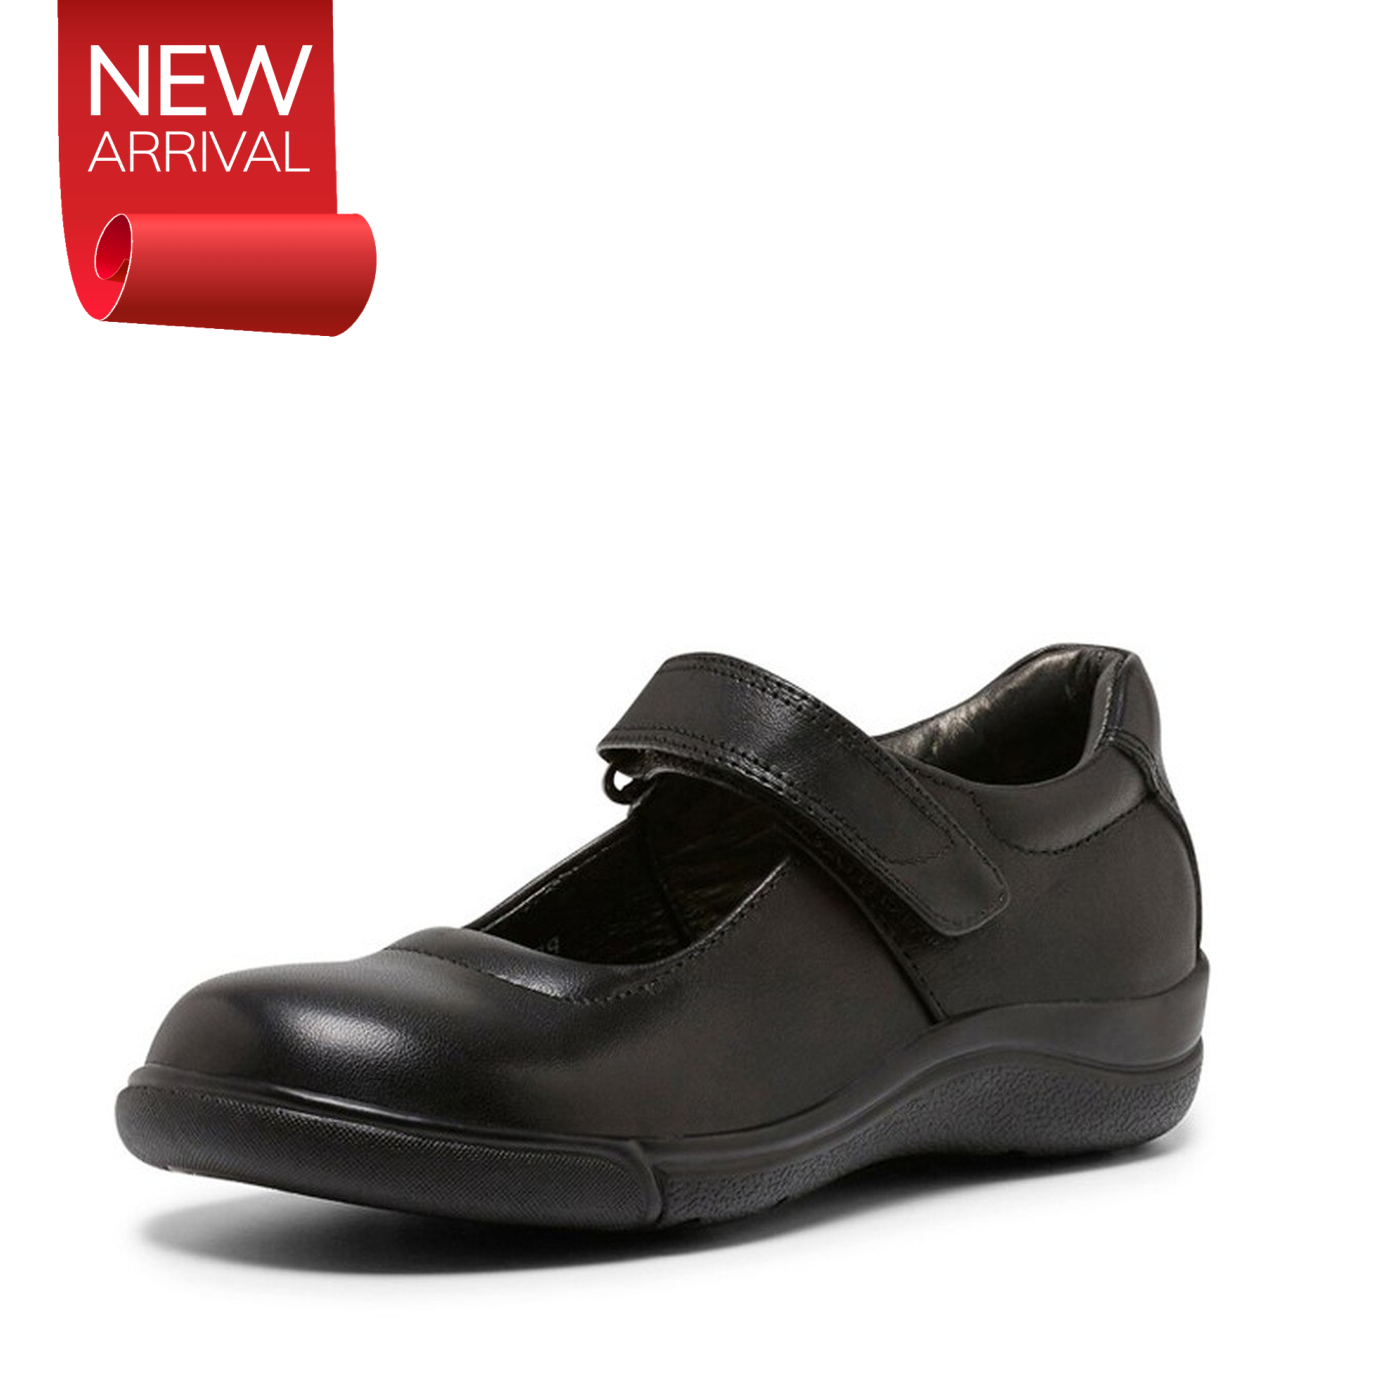 specifikation i aften gips Clarks Premium Girls Leather School Shoes Petite Black UK Size 8-3 a –  School Depot NZ